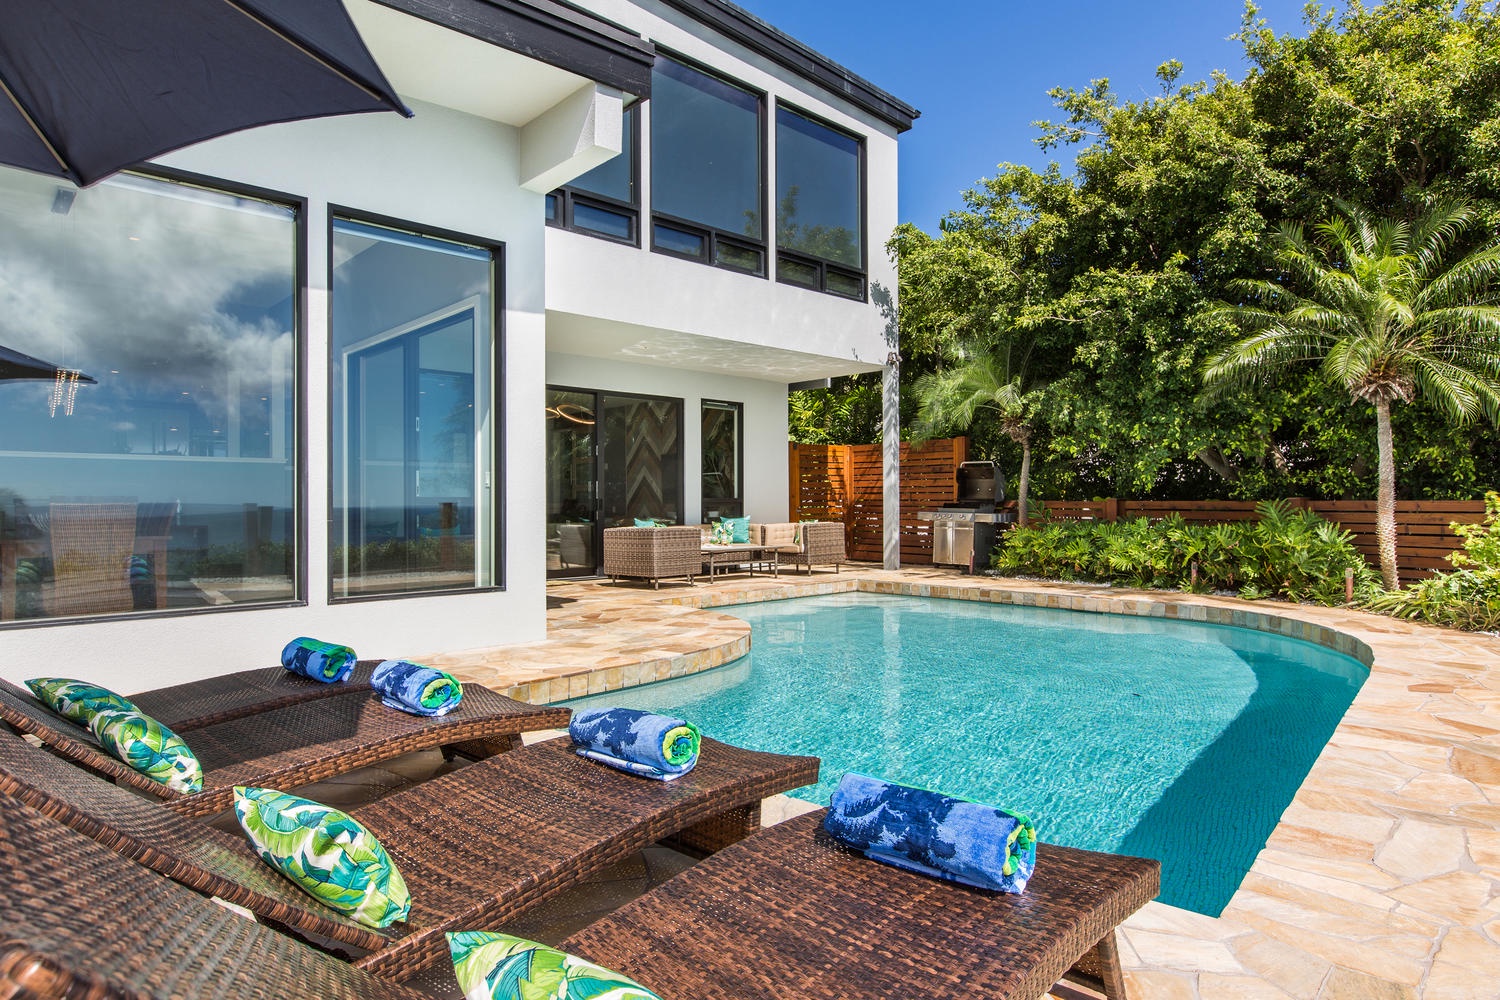 Honolulu Vacation Rentals, Aloha Nalu - Take a dip in the crystal clear pool.